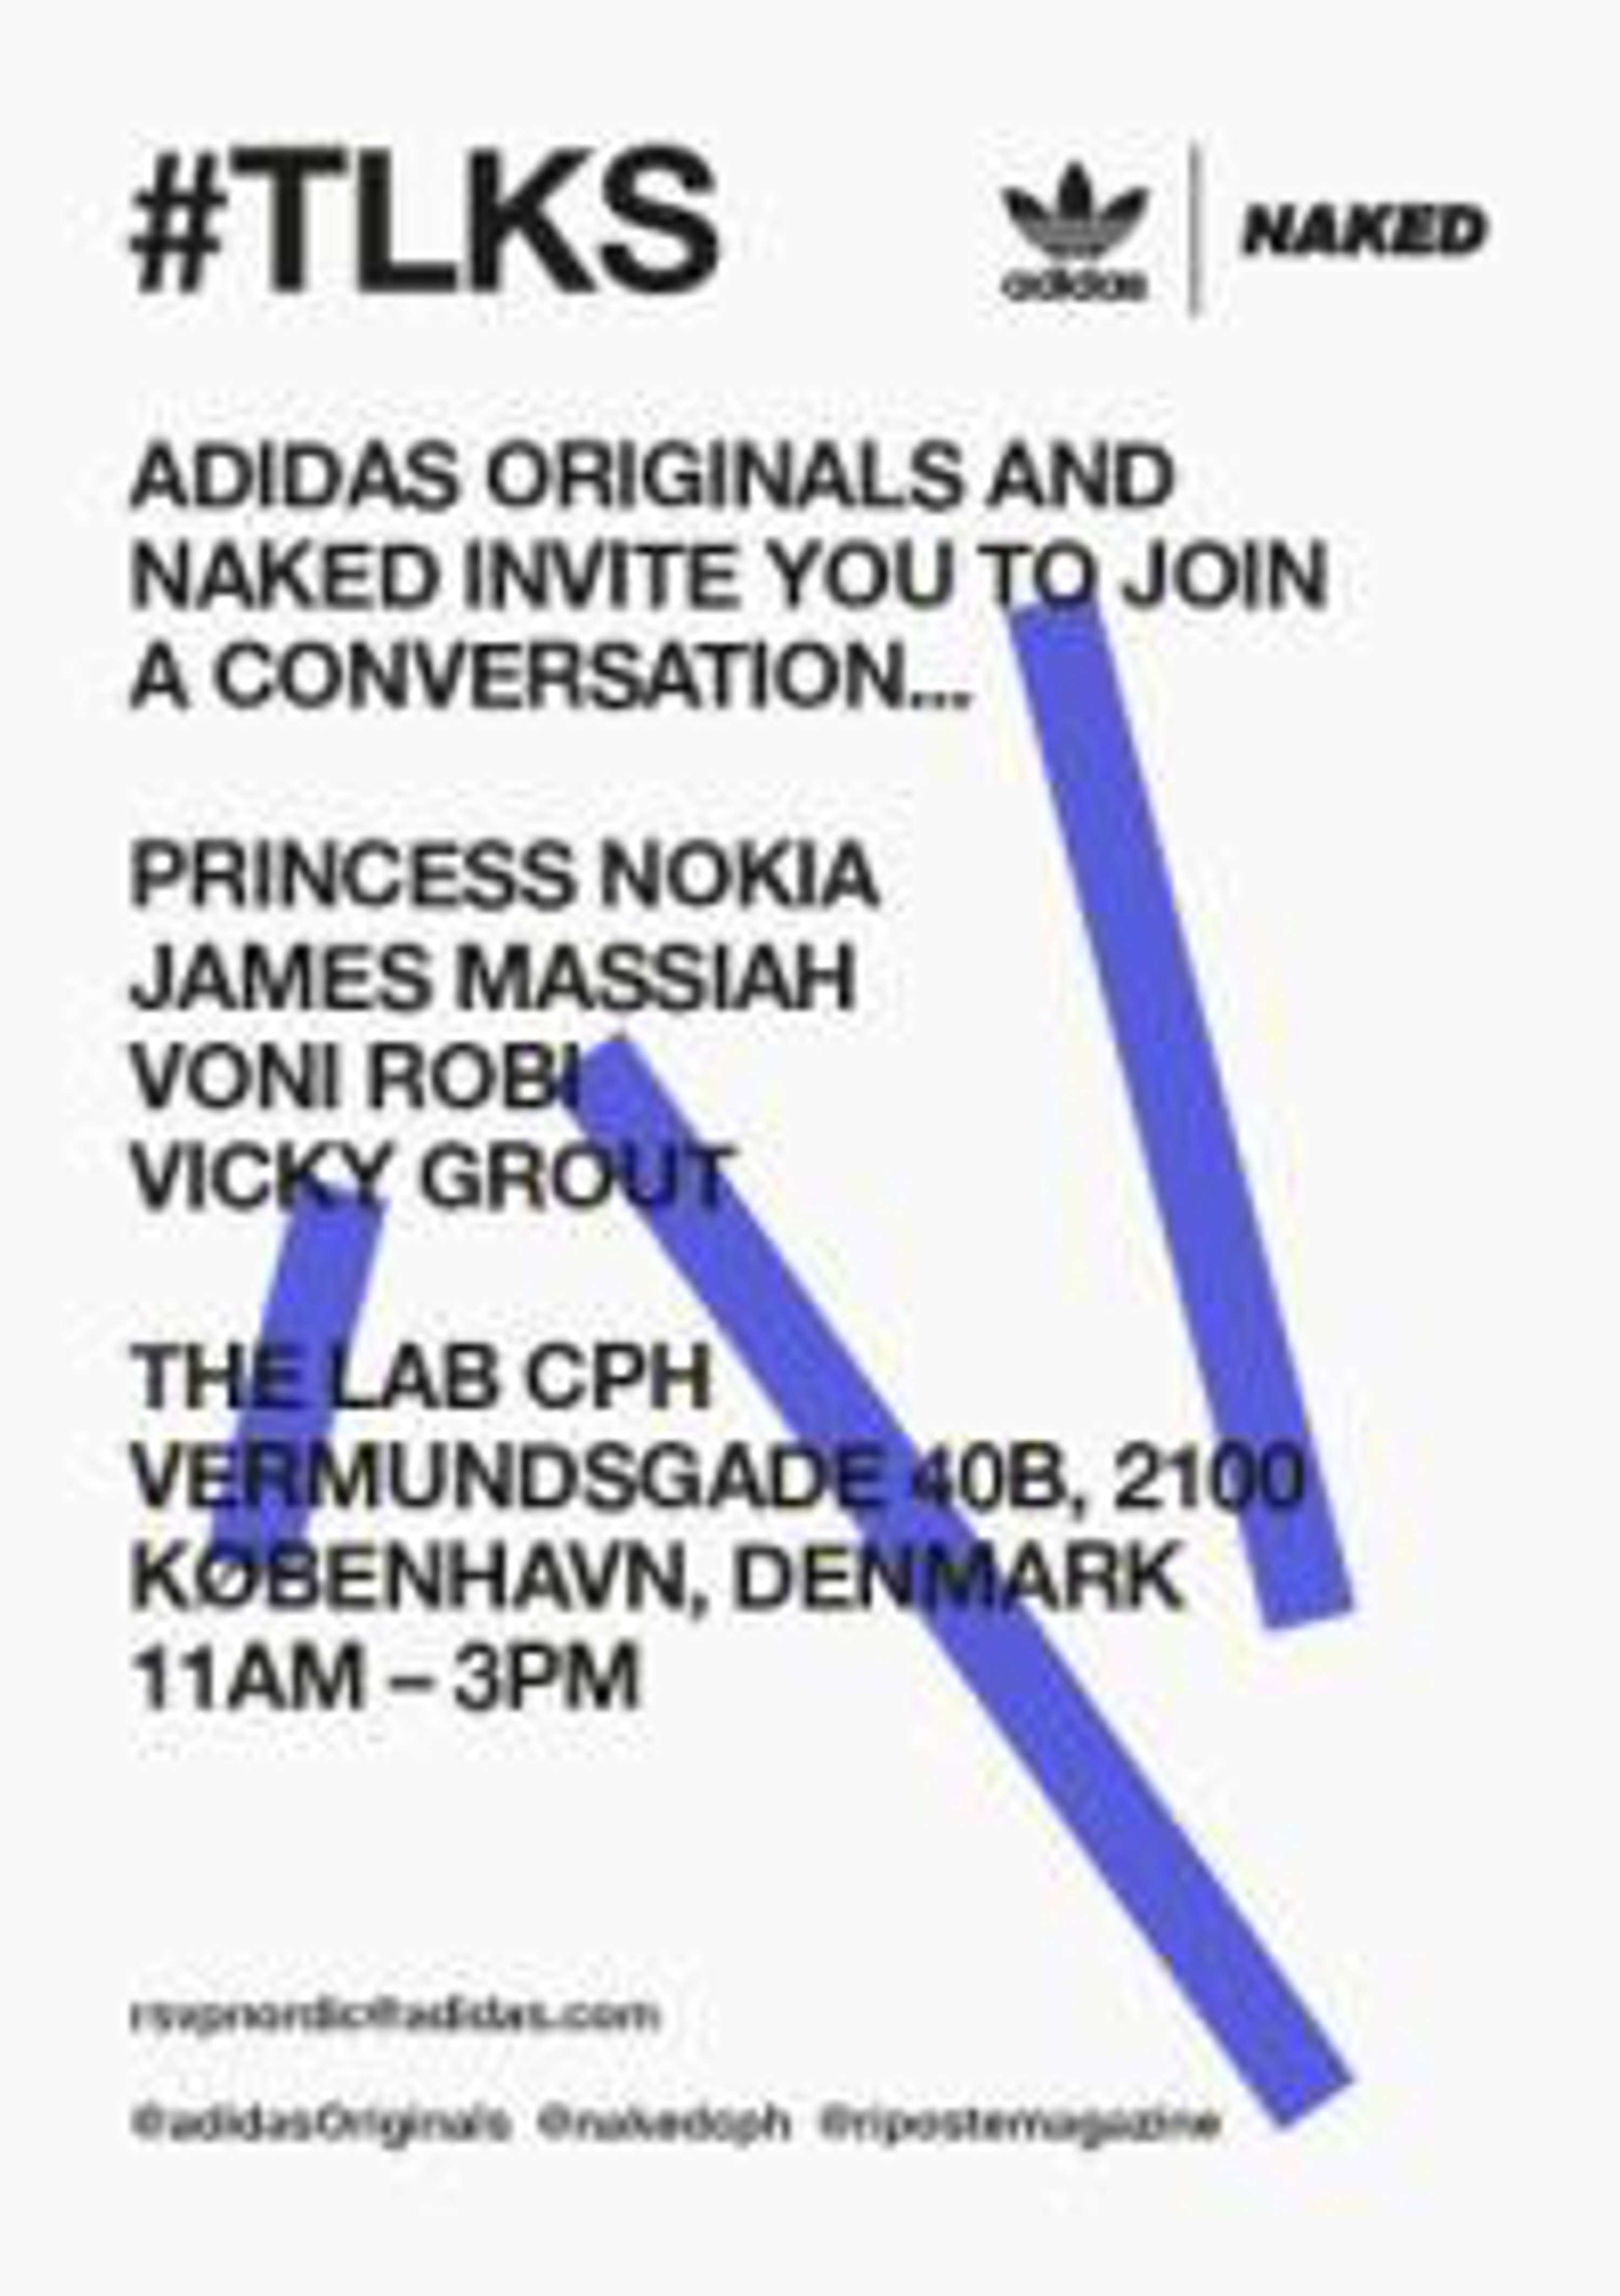 adidas Originals & NAKED #TLKS | The Dots